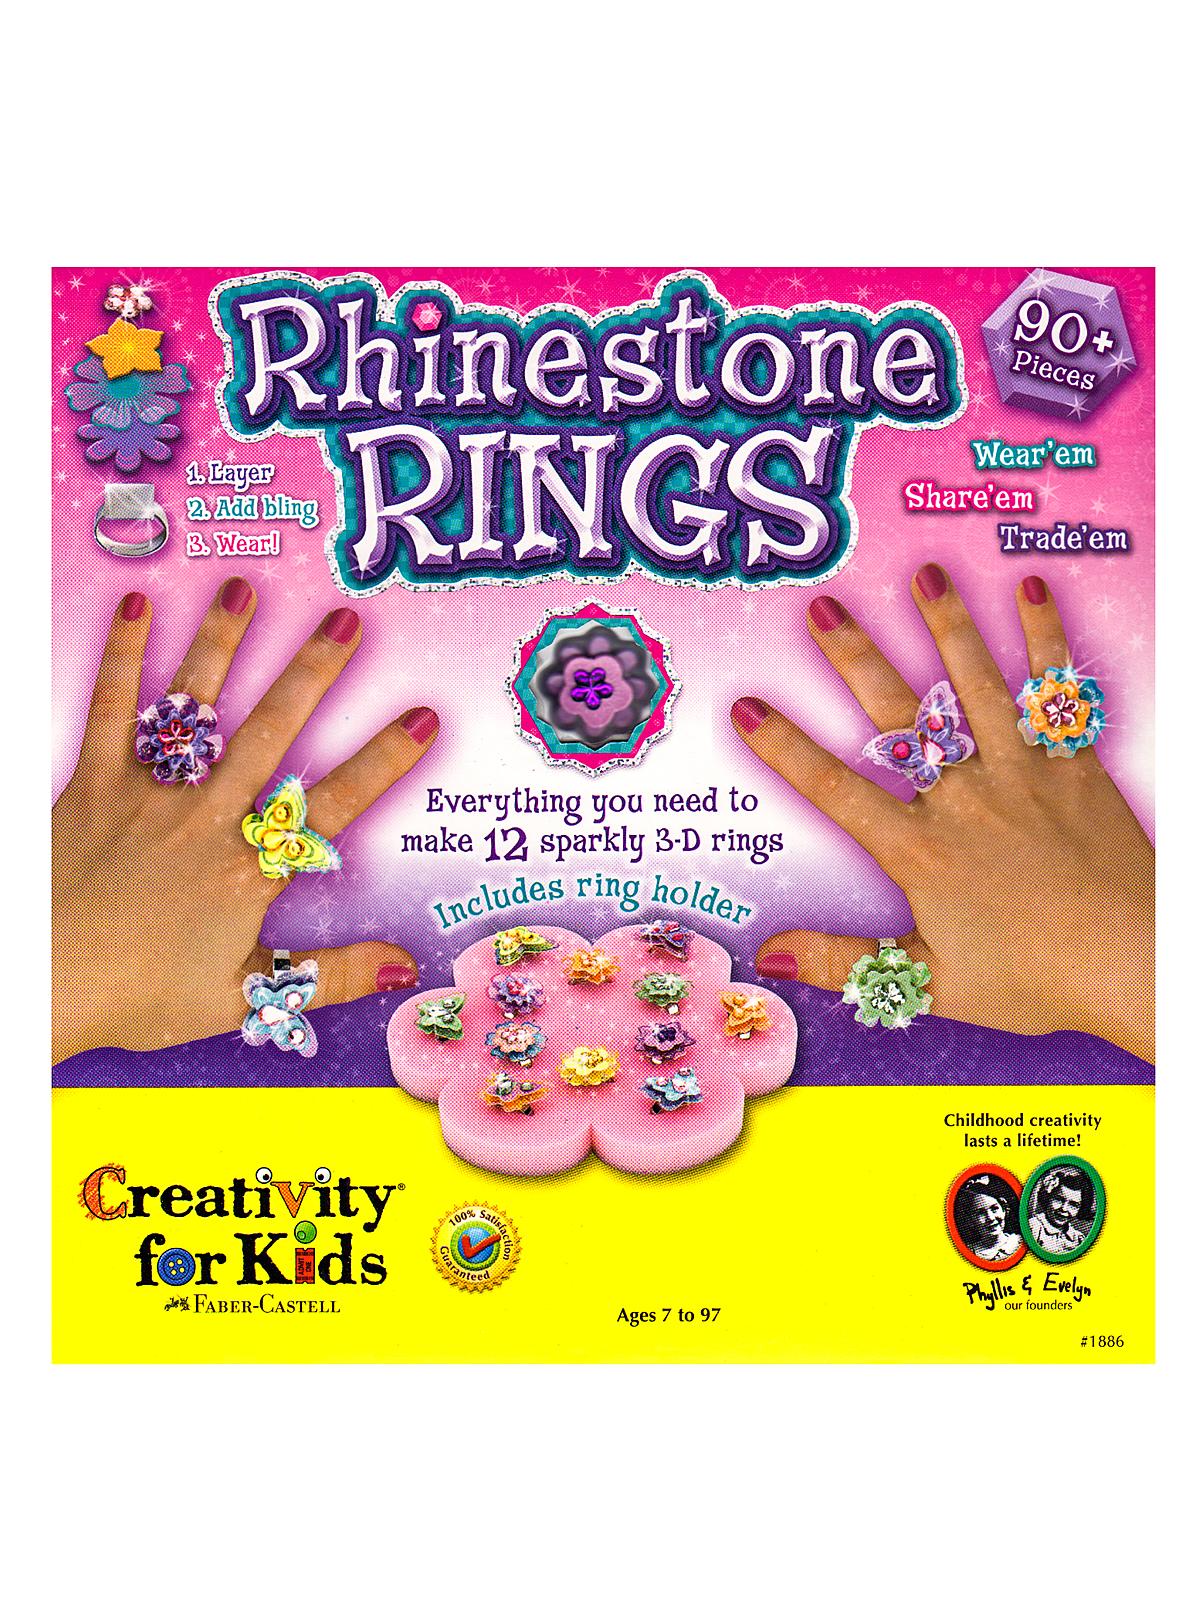 Rhinestone Rings Each